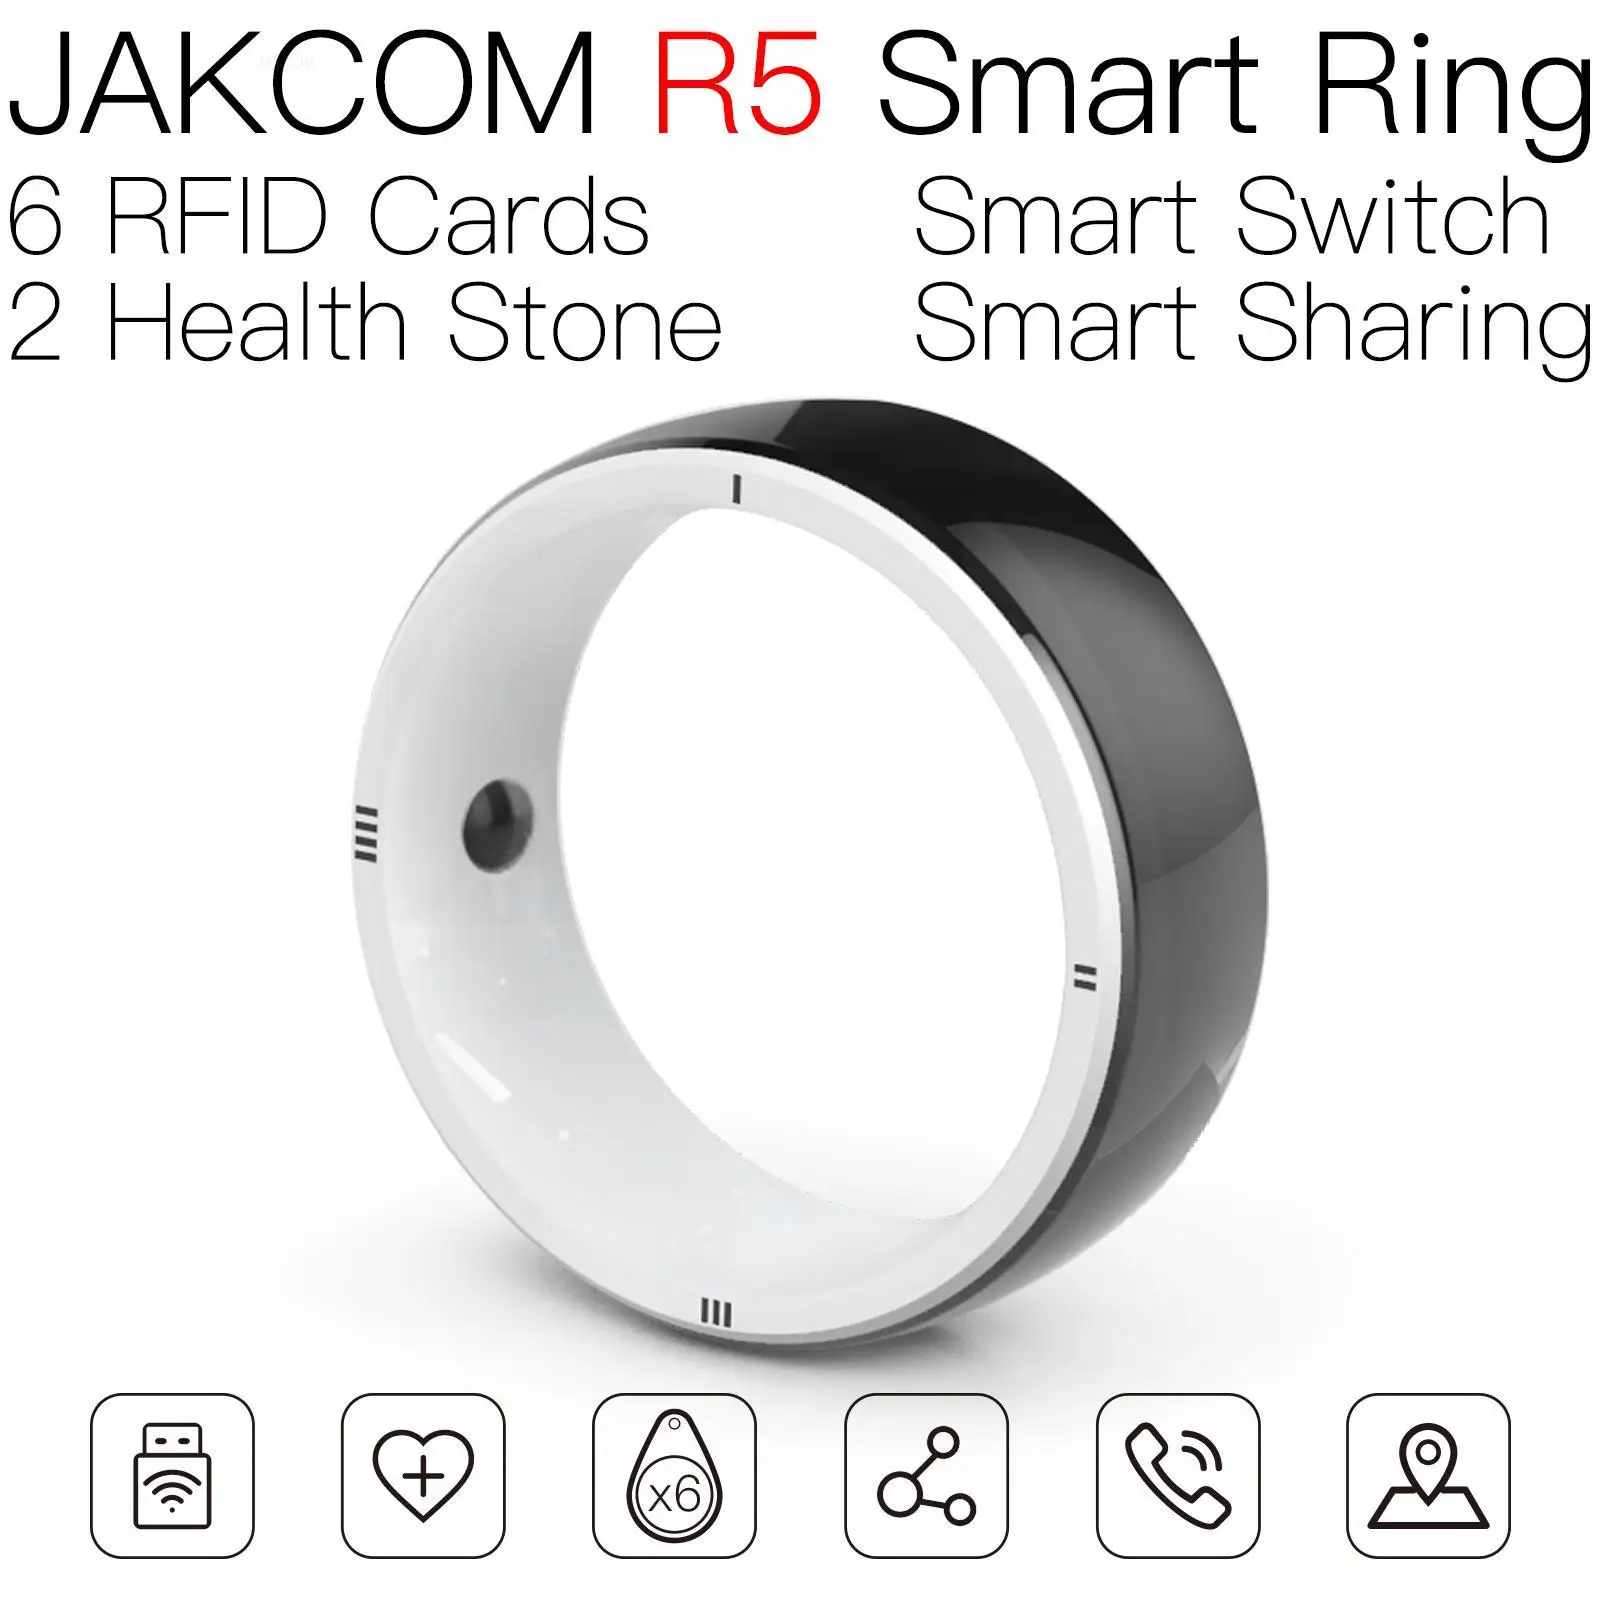 

JAKCOM R5 Smart Ring Match to alien rfid uhf nfc 14443a mini pet tag wall amibo card rewritable sticker unlock lector as